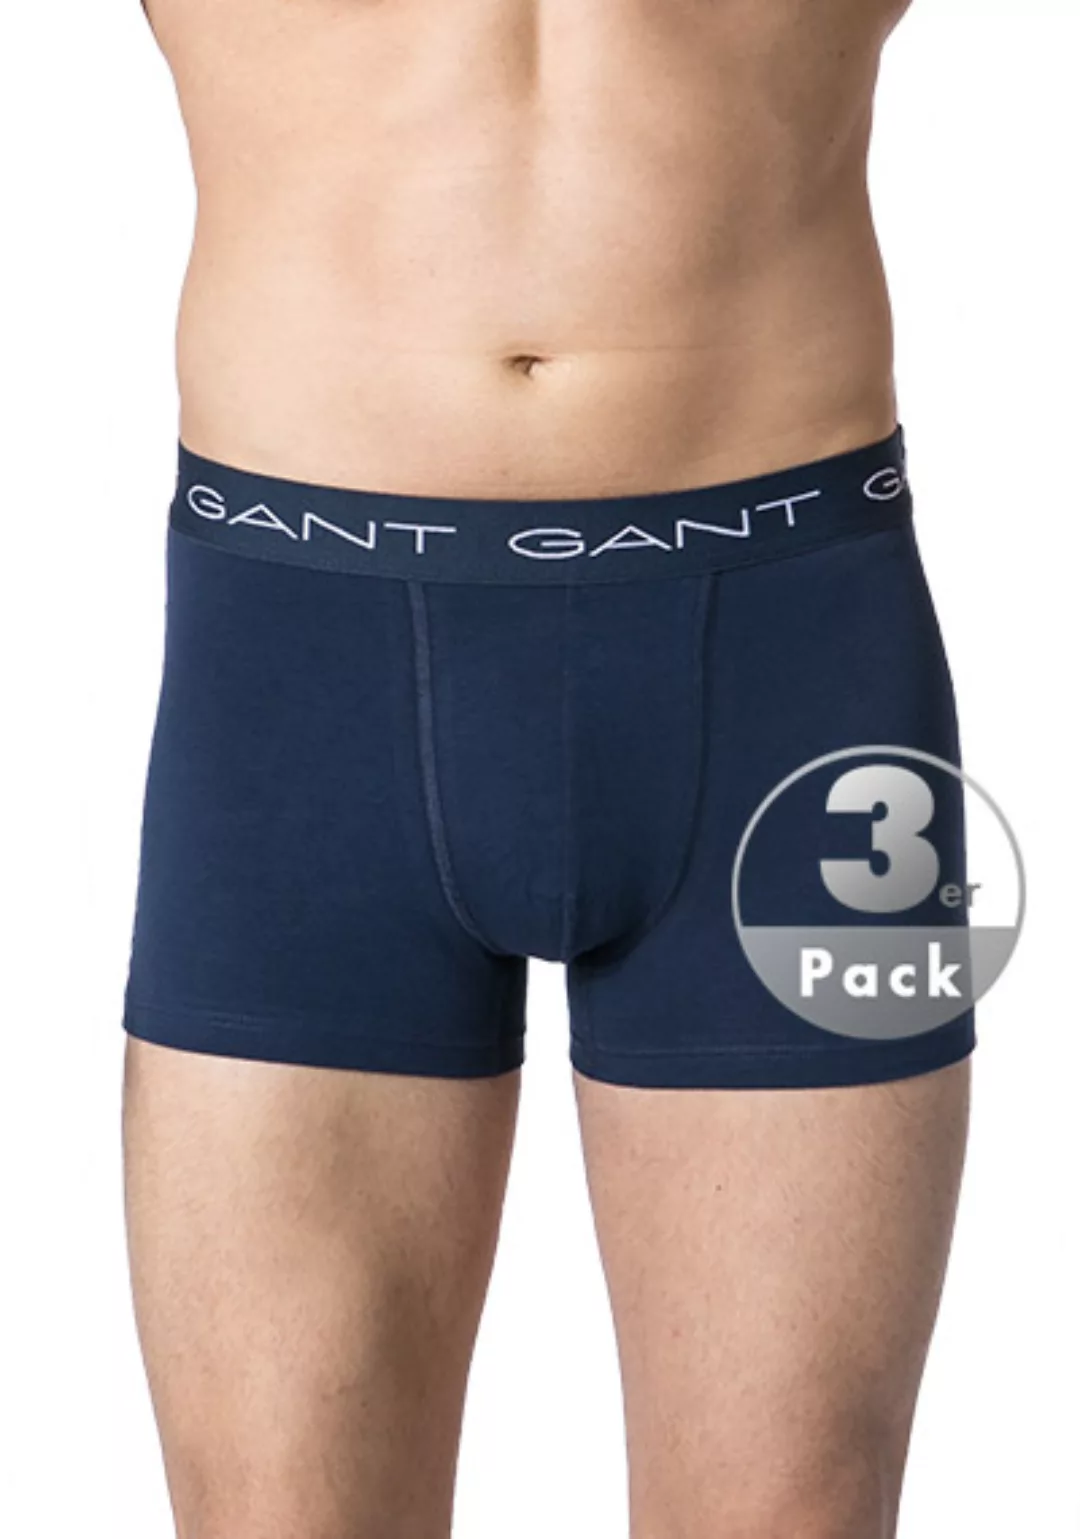 Gant Trunks 3er Pack 900003003/405 günstig online kaufen